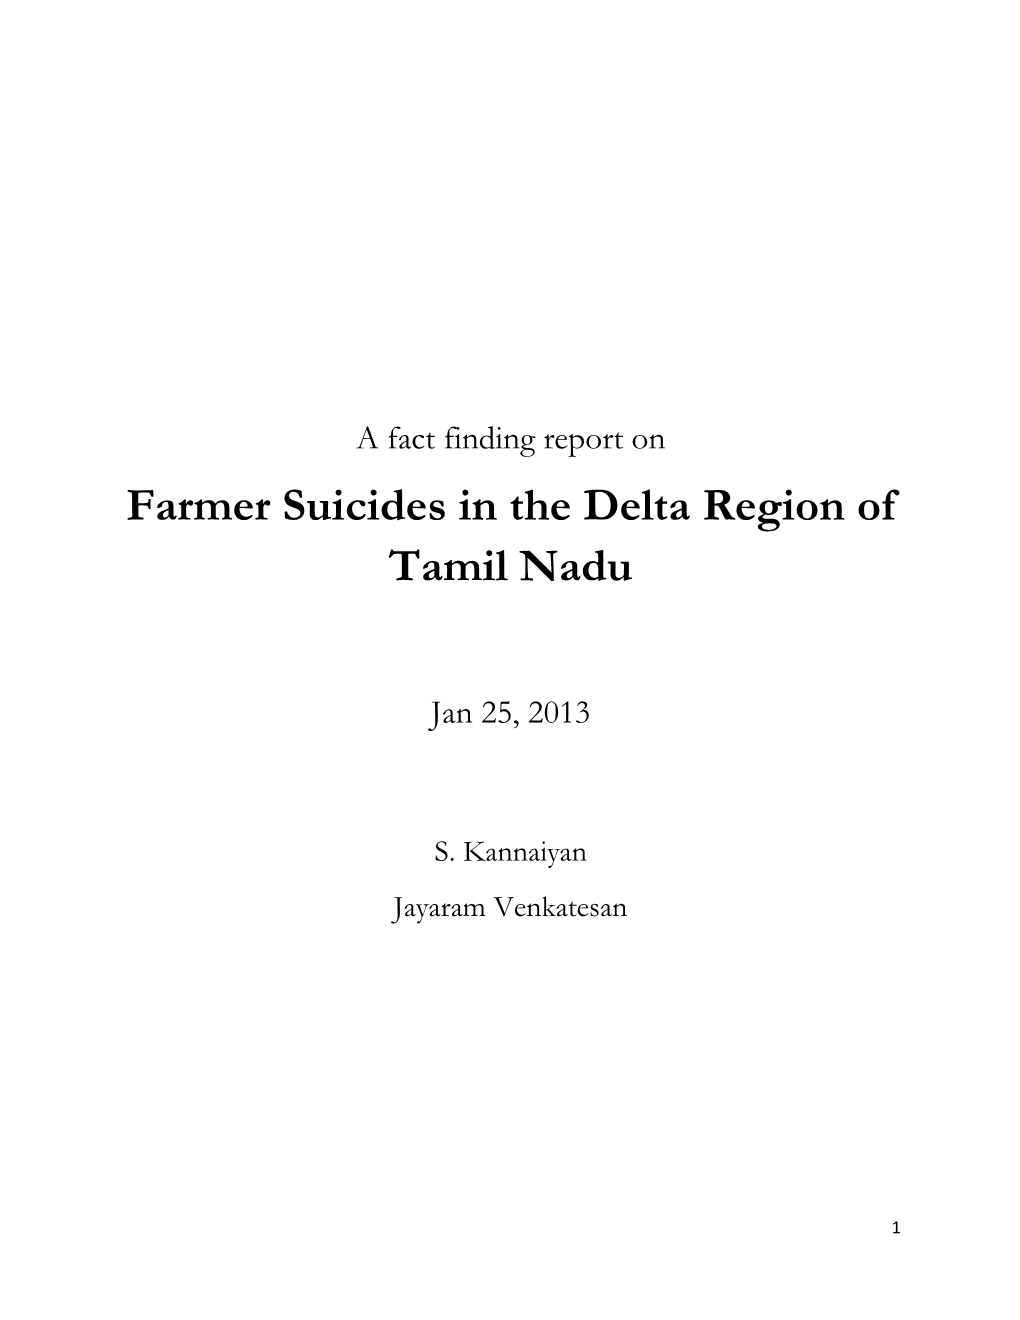 Farmer Suicides in the Delta Region of Tamil Nadu